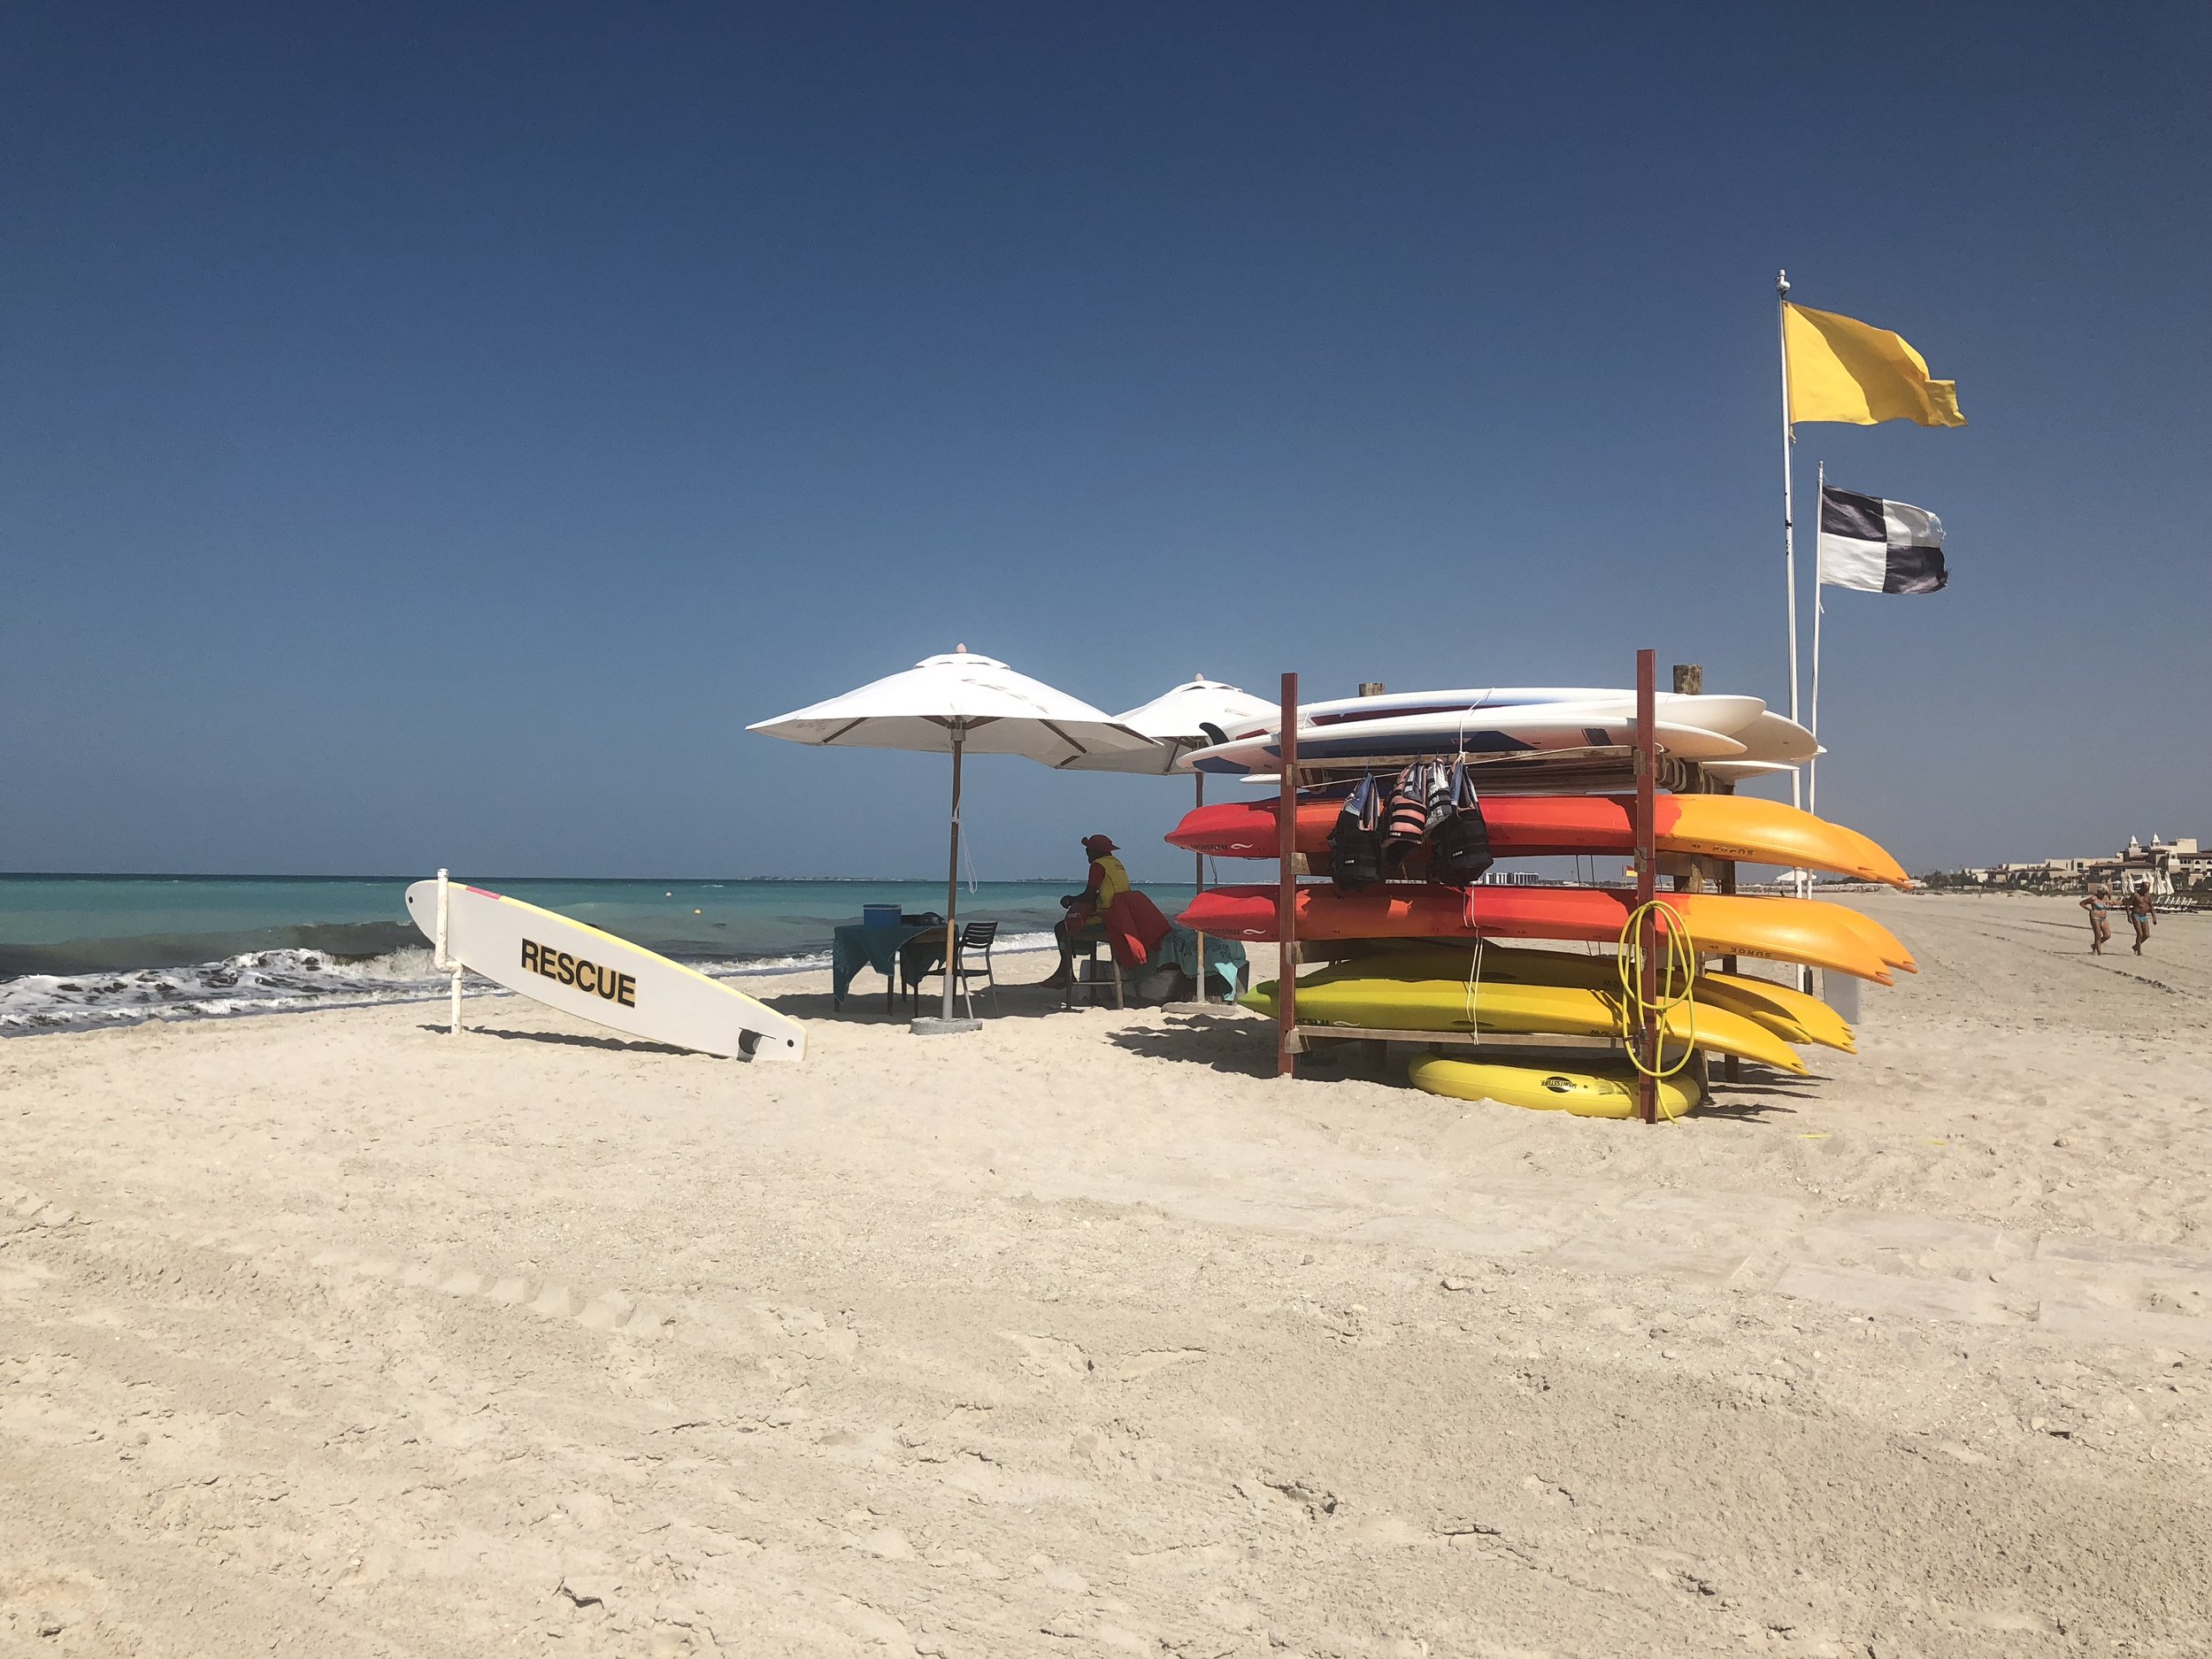 St Regis Hotel, beach, Abu Dhabi.jpg